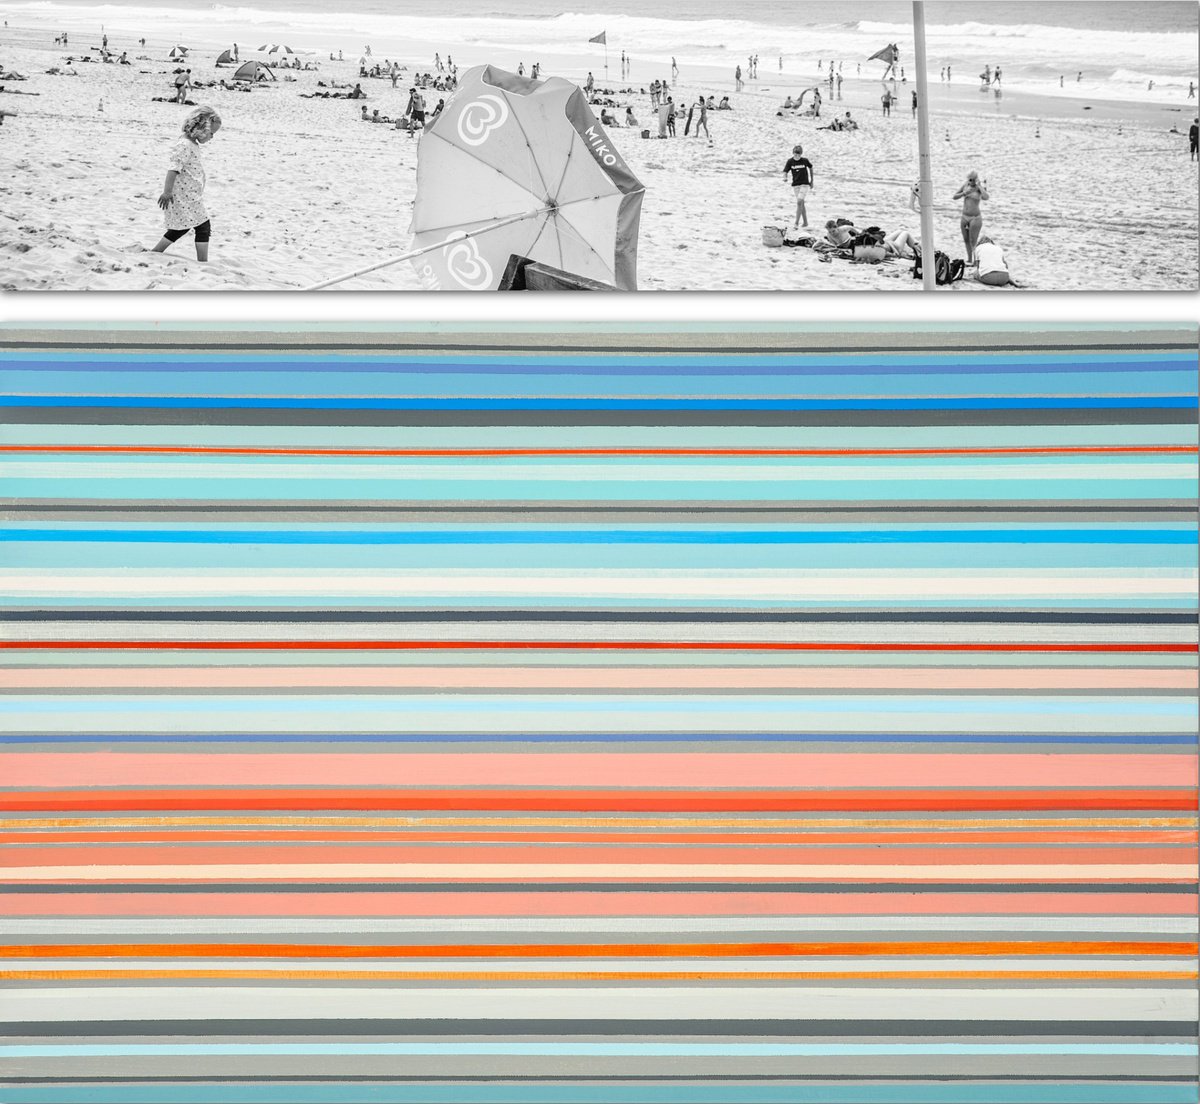 Emotional landscape 18 (beach) by Susana Sancho Beltr�n